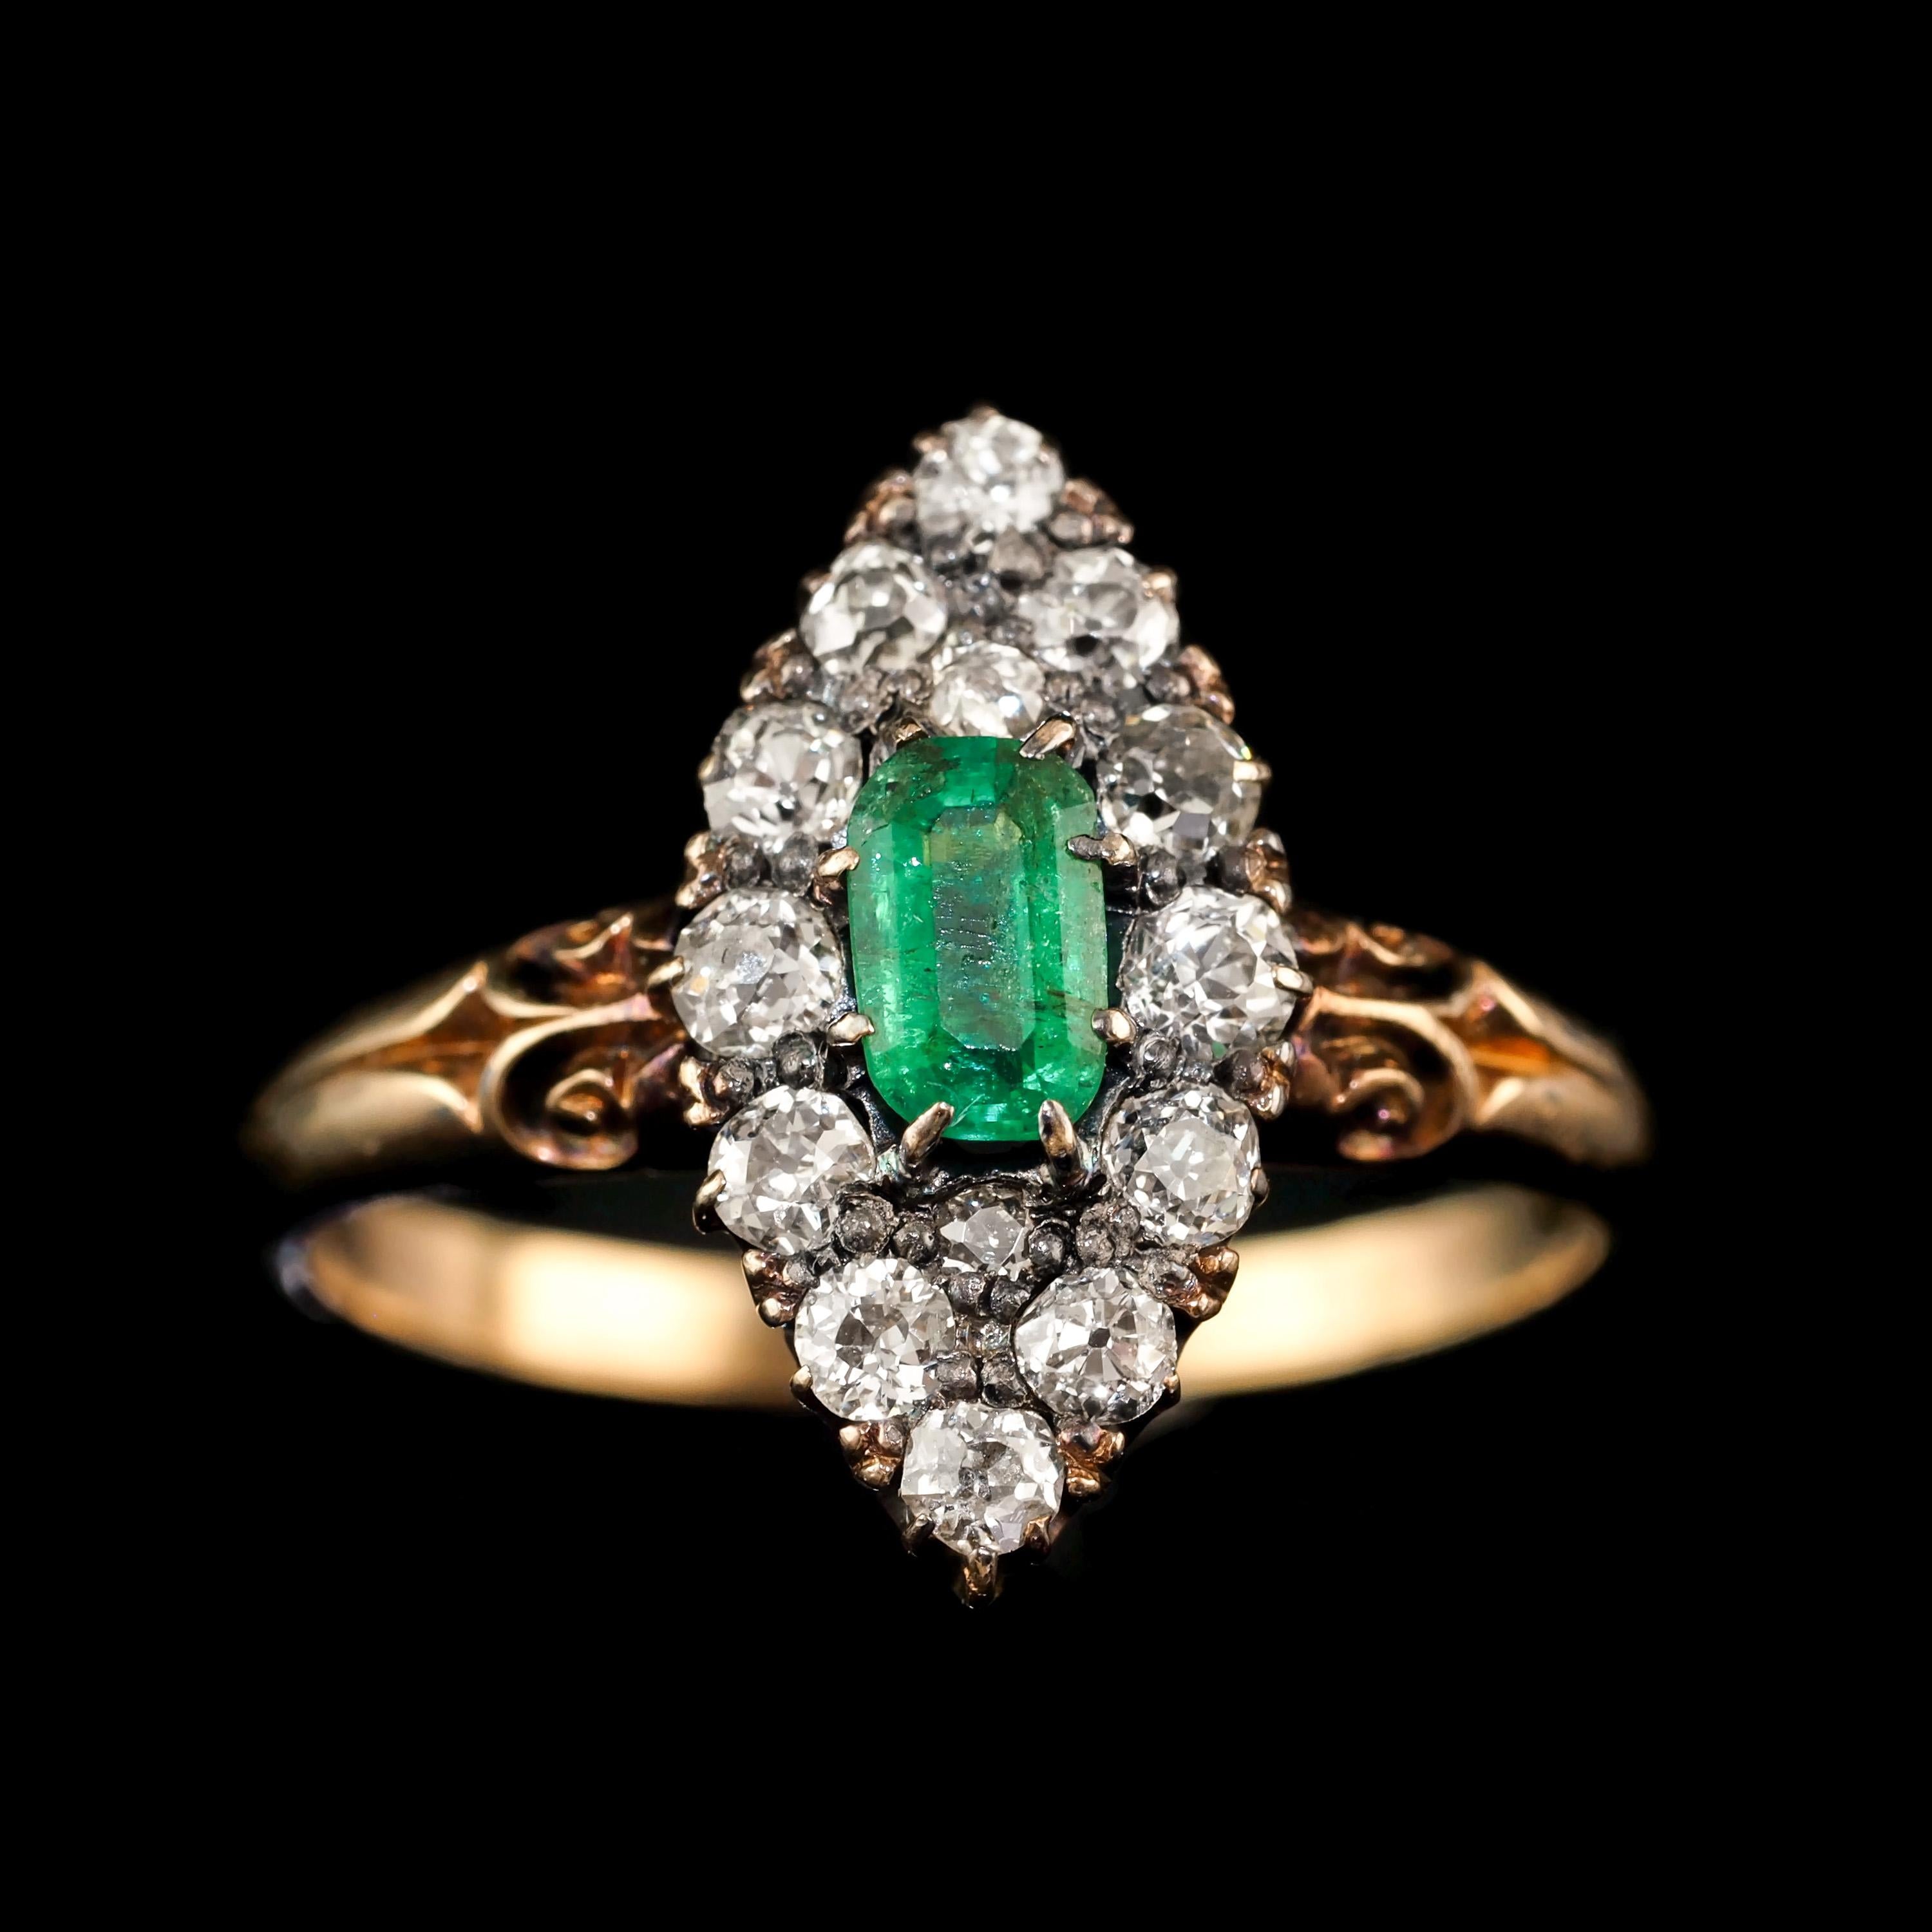 Antique Victorian 18K Gold Emerald & Diamond Navette Cluster Ring - c.1880 For Sale 1